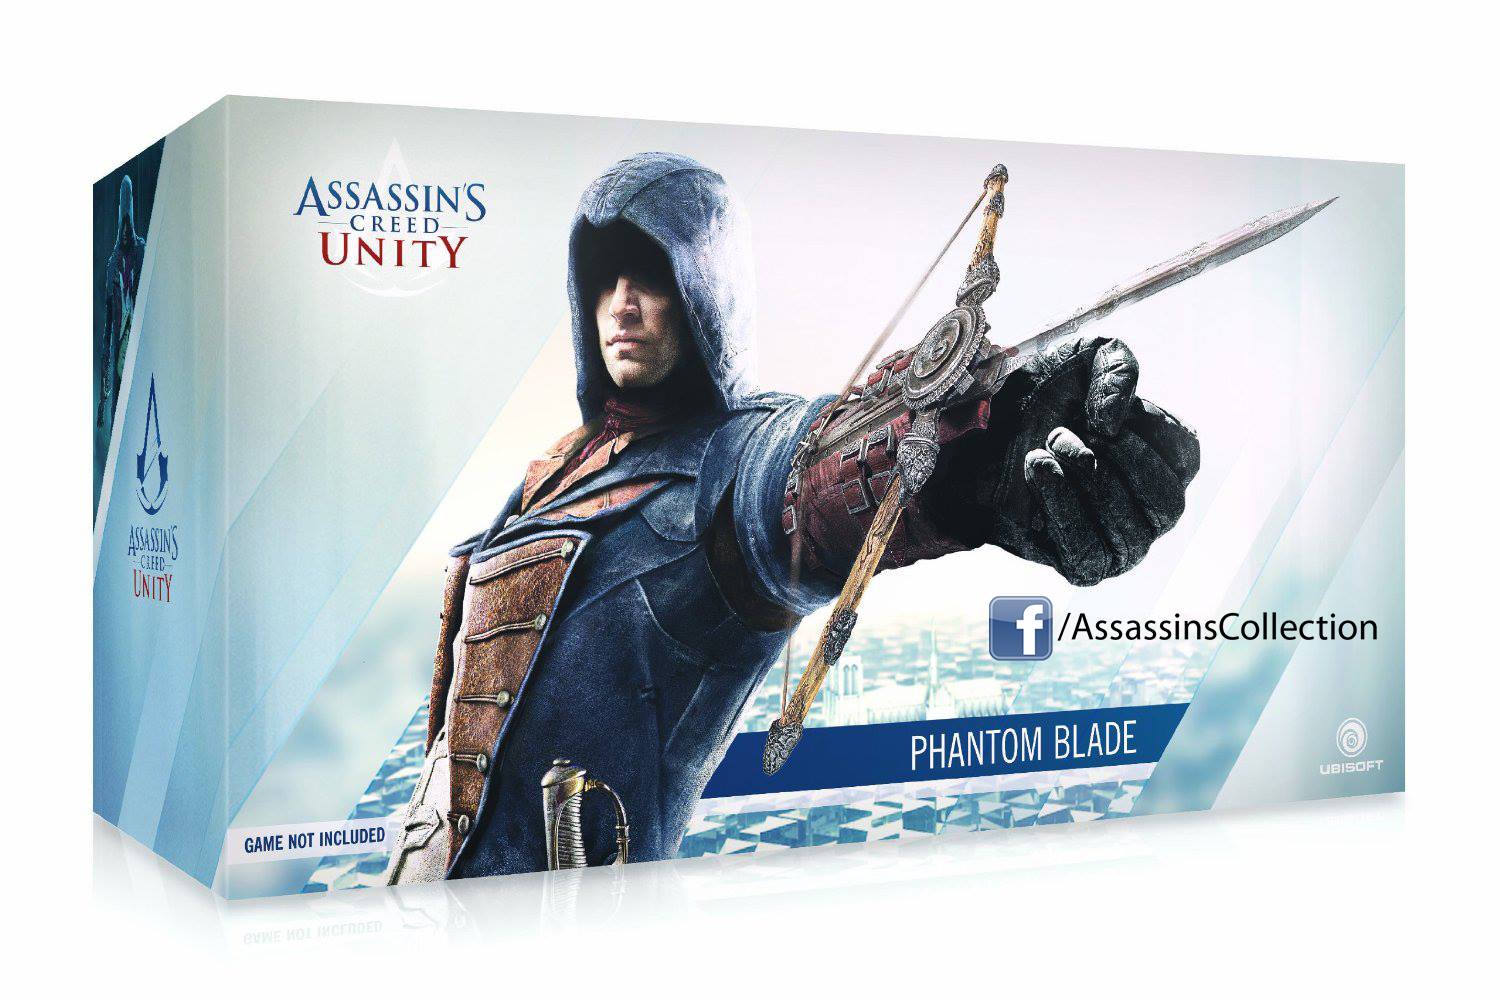  Assassin’s Creed Unity Phantom Blade